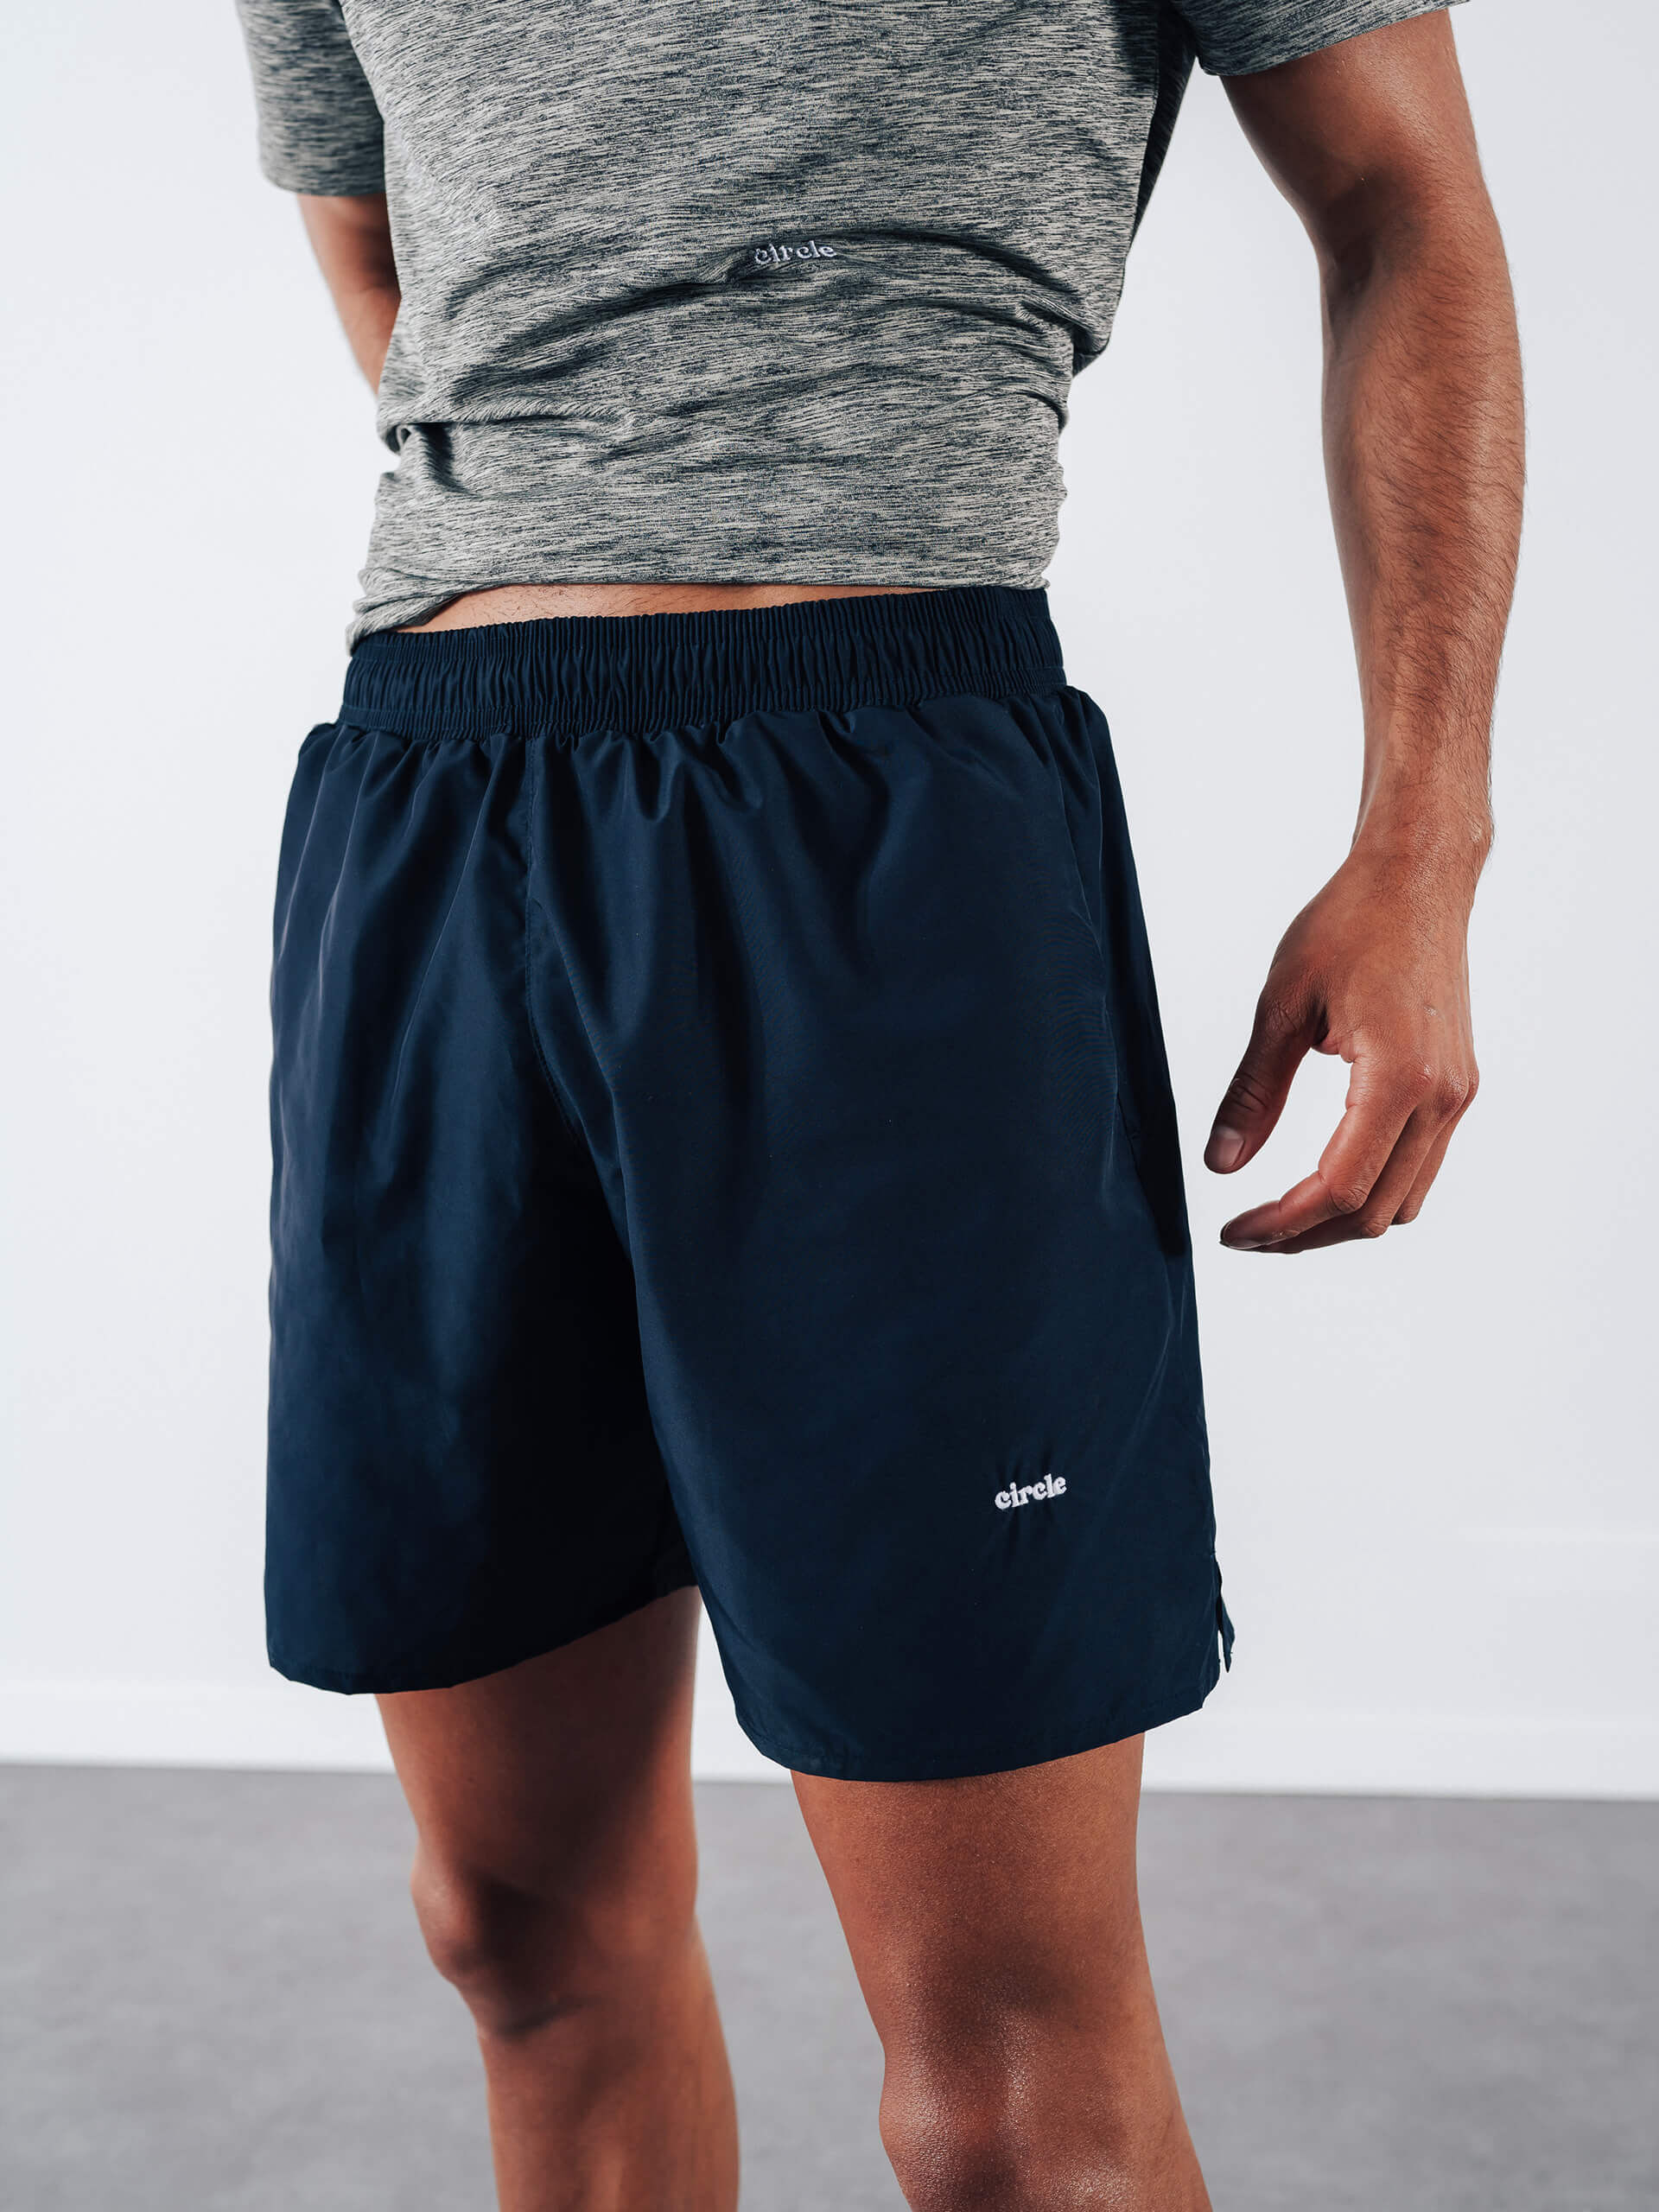 Circle Sportswear Sport One For All - Pantalones cortos de running - Hombre